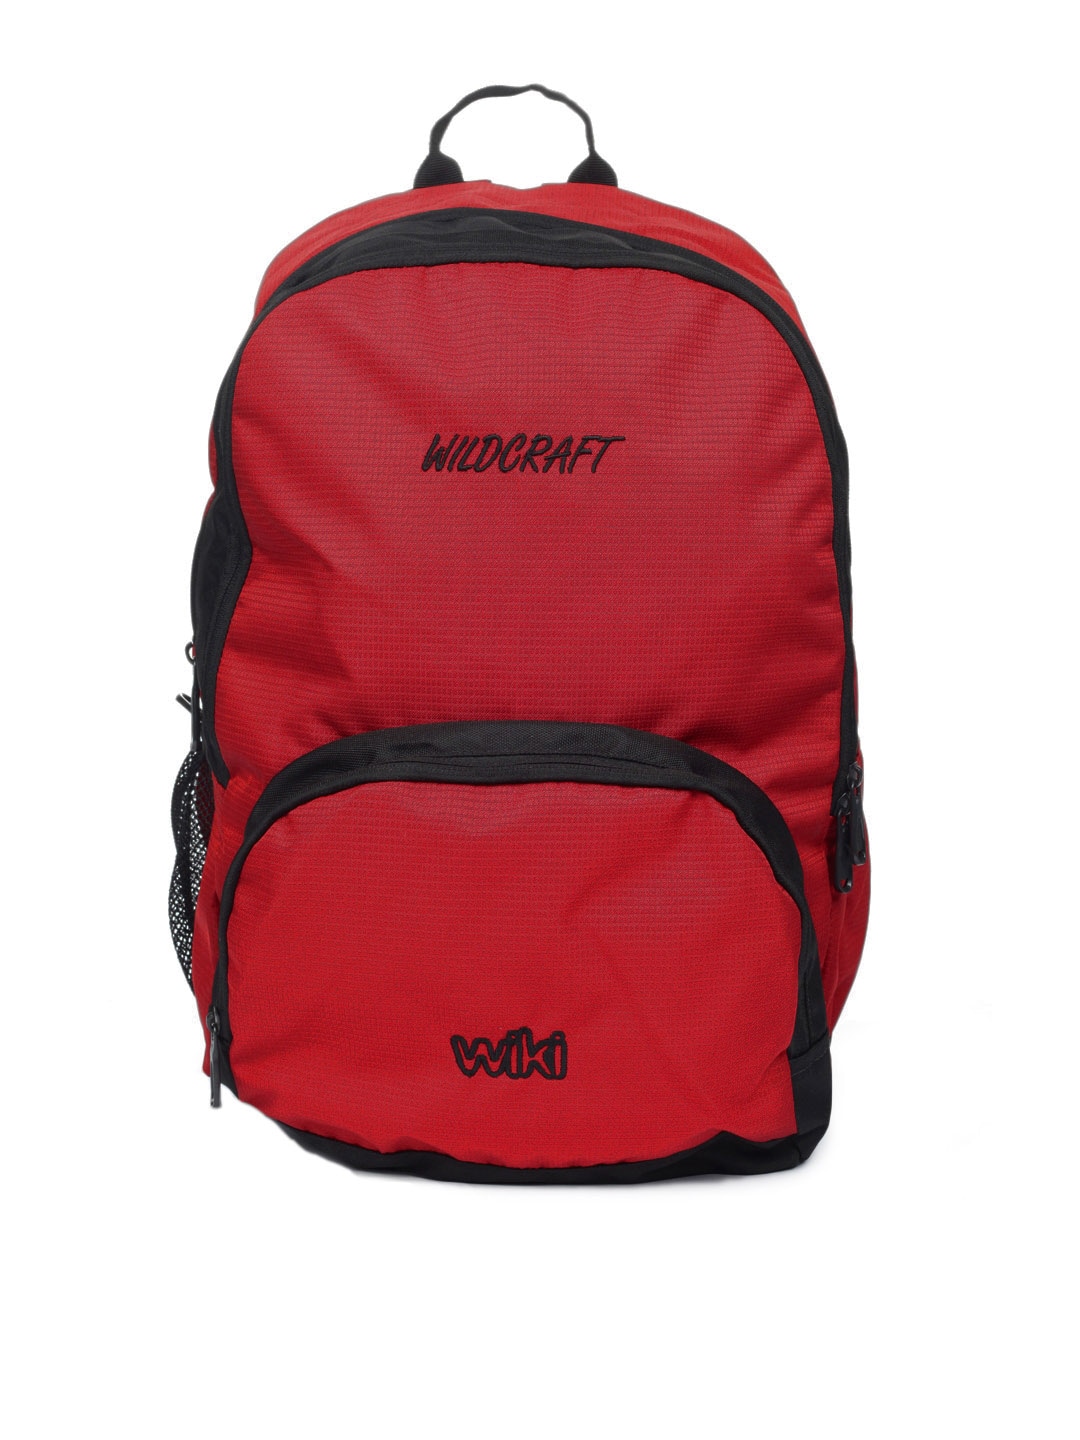 Wildcraft Unisex Red Backpack